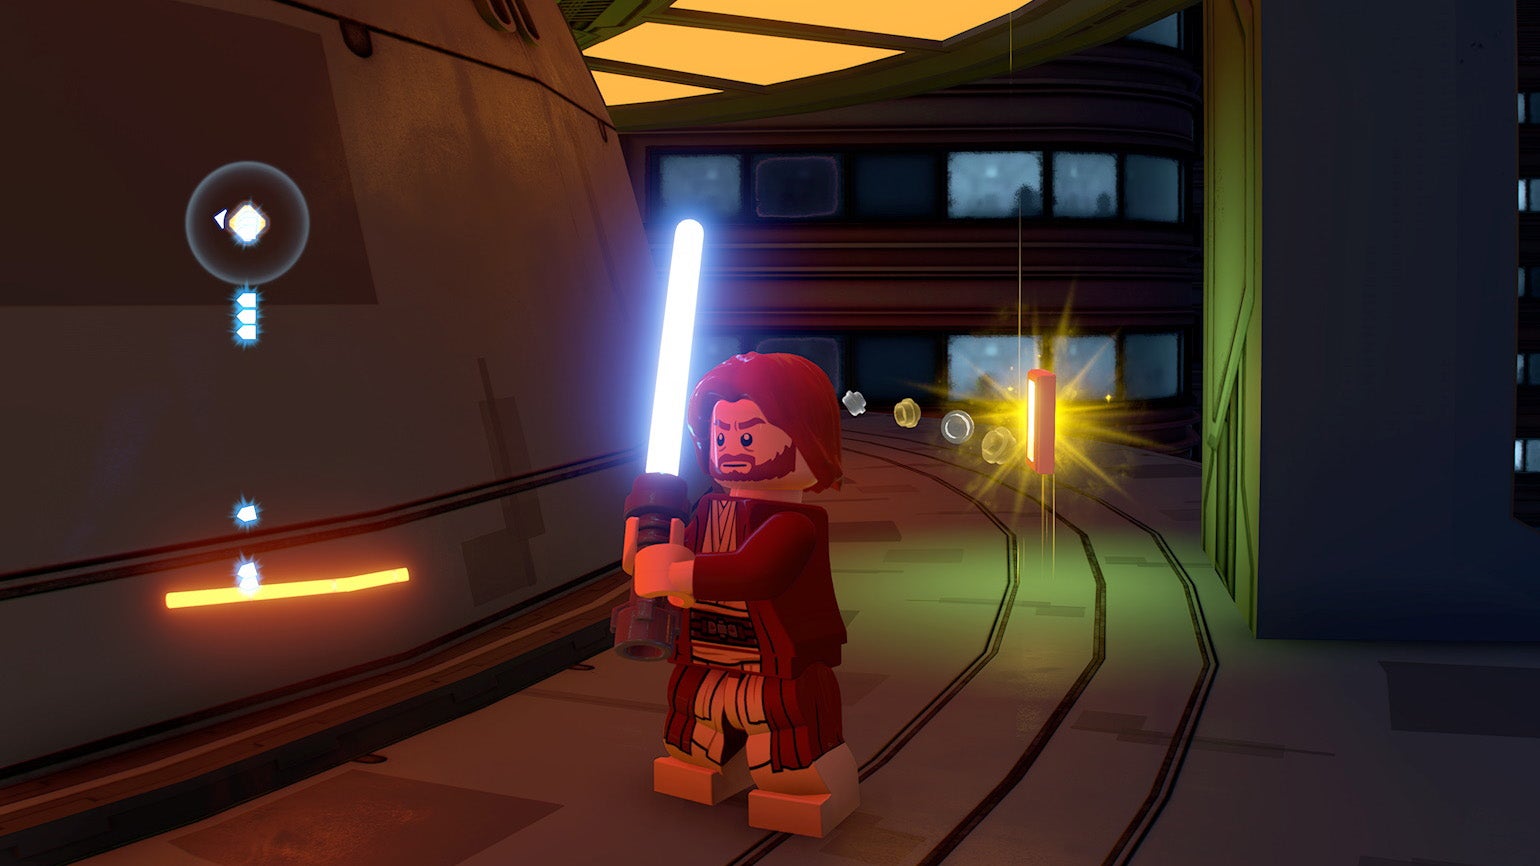 Image for LEGO Star Wars Skywalker Saga Datacards locations: How to get Datacards explained